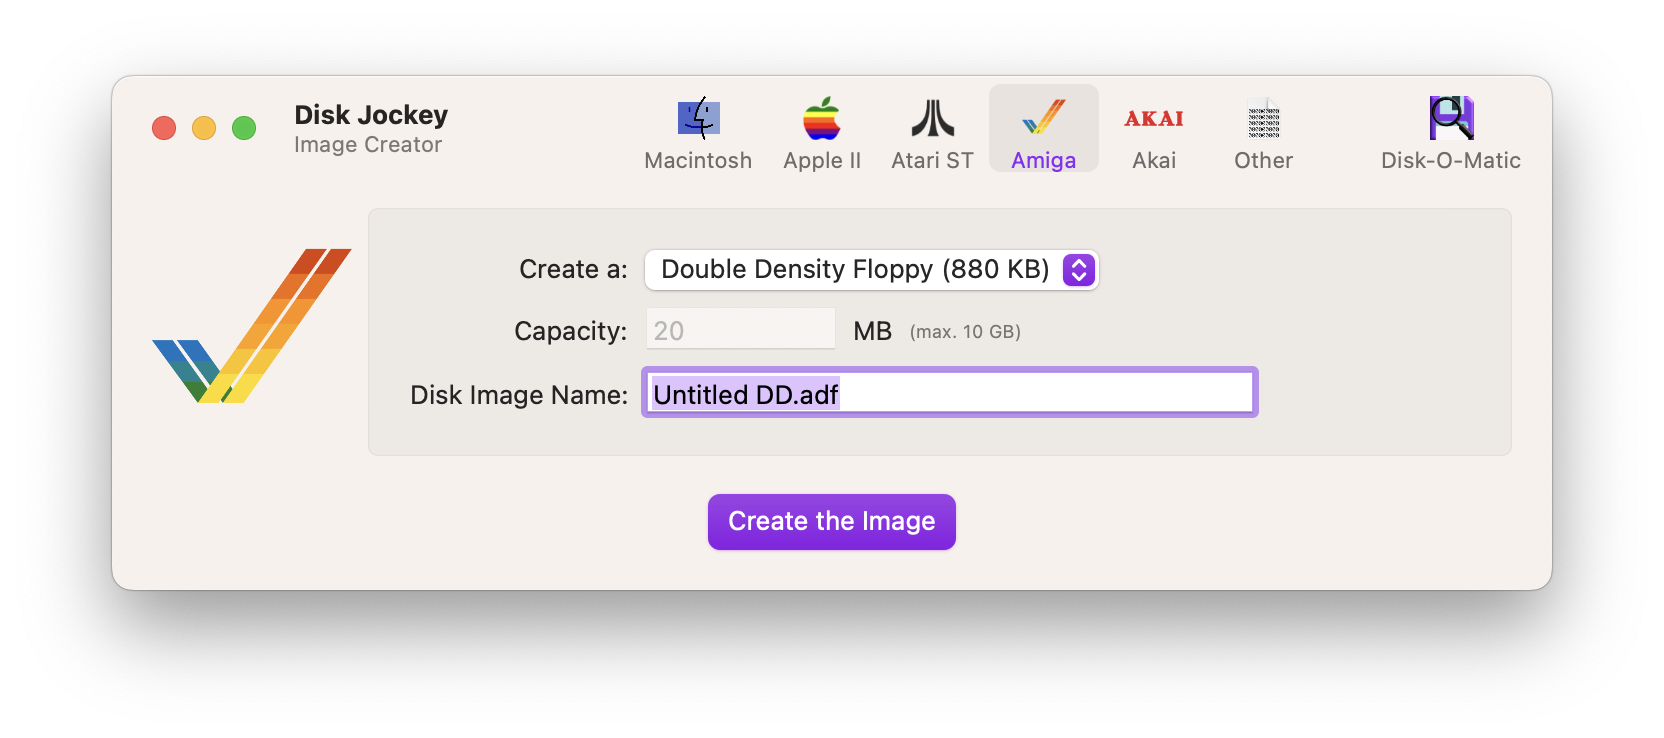 A screenshot of Disk Jockey with the Amiga image creator displayed